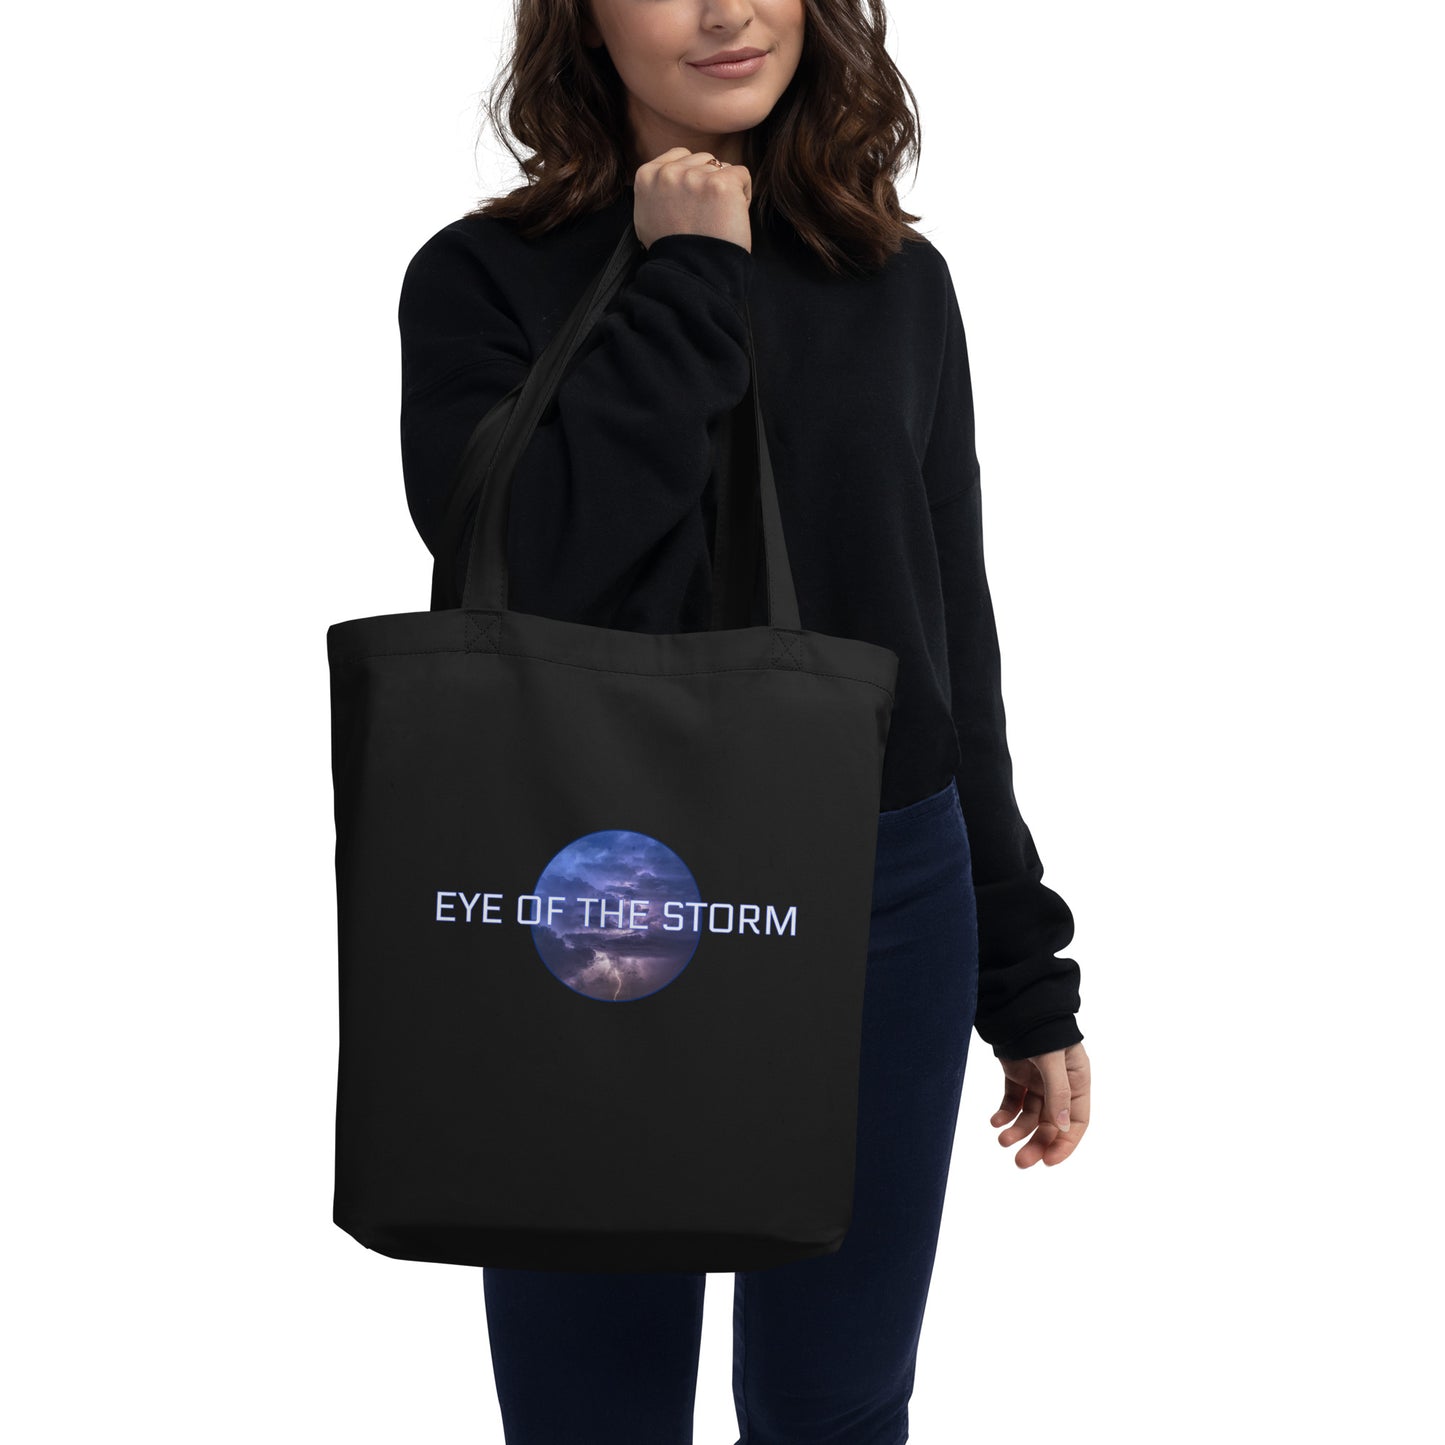 Eye of the Storm Eco Tote Bag (black)